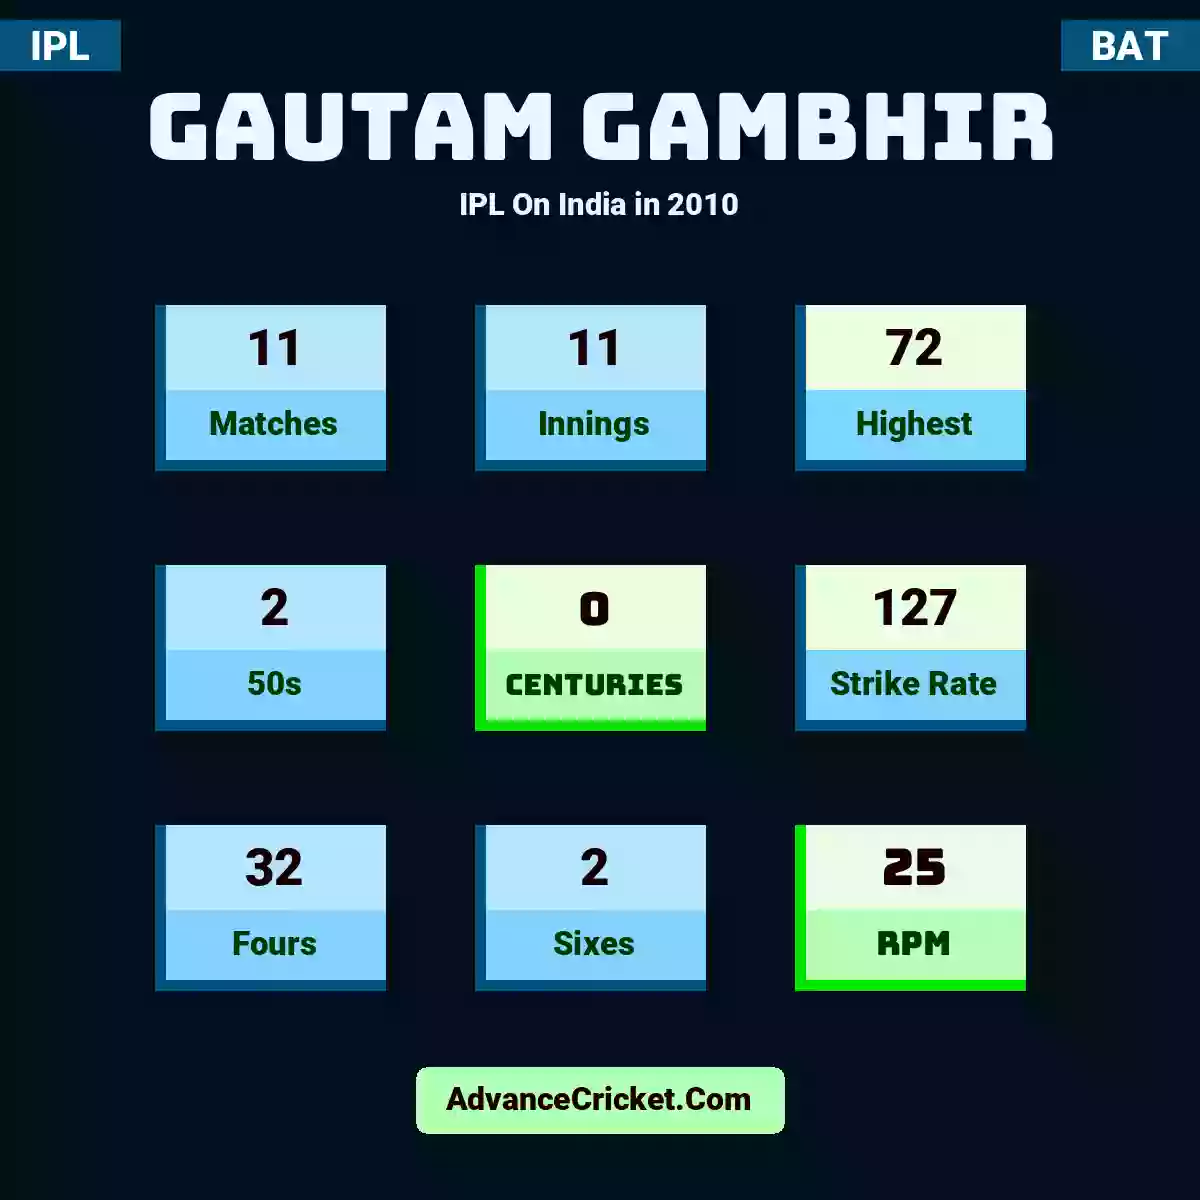 Gautam Gambhir IPL  On India in 2010, Gautam Gambhir played 11 matches, scored 72 runs as highest, 2 half-centuries, and 0 centuries, with a strike rate of 127. G.Gambhir hit 32 fours and 2 sixes, with an RPM of 25.